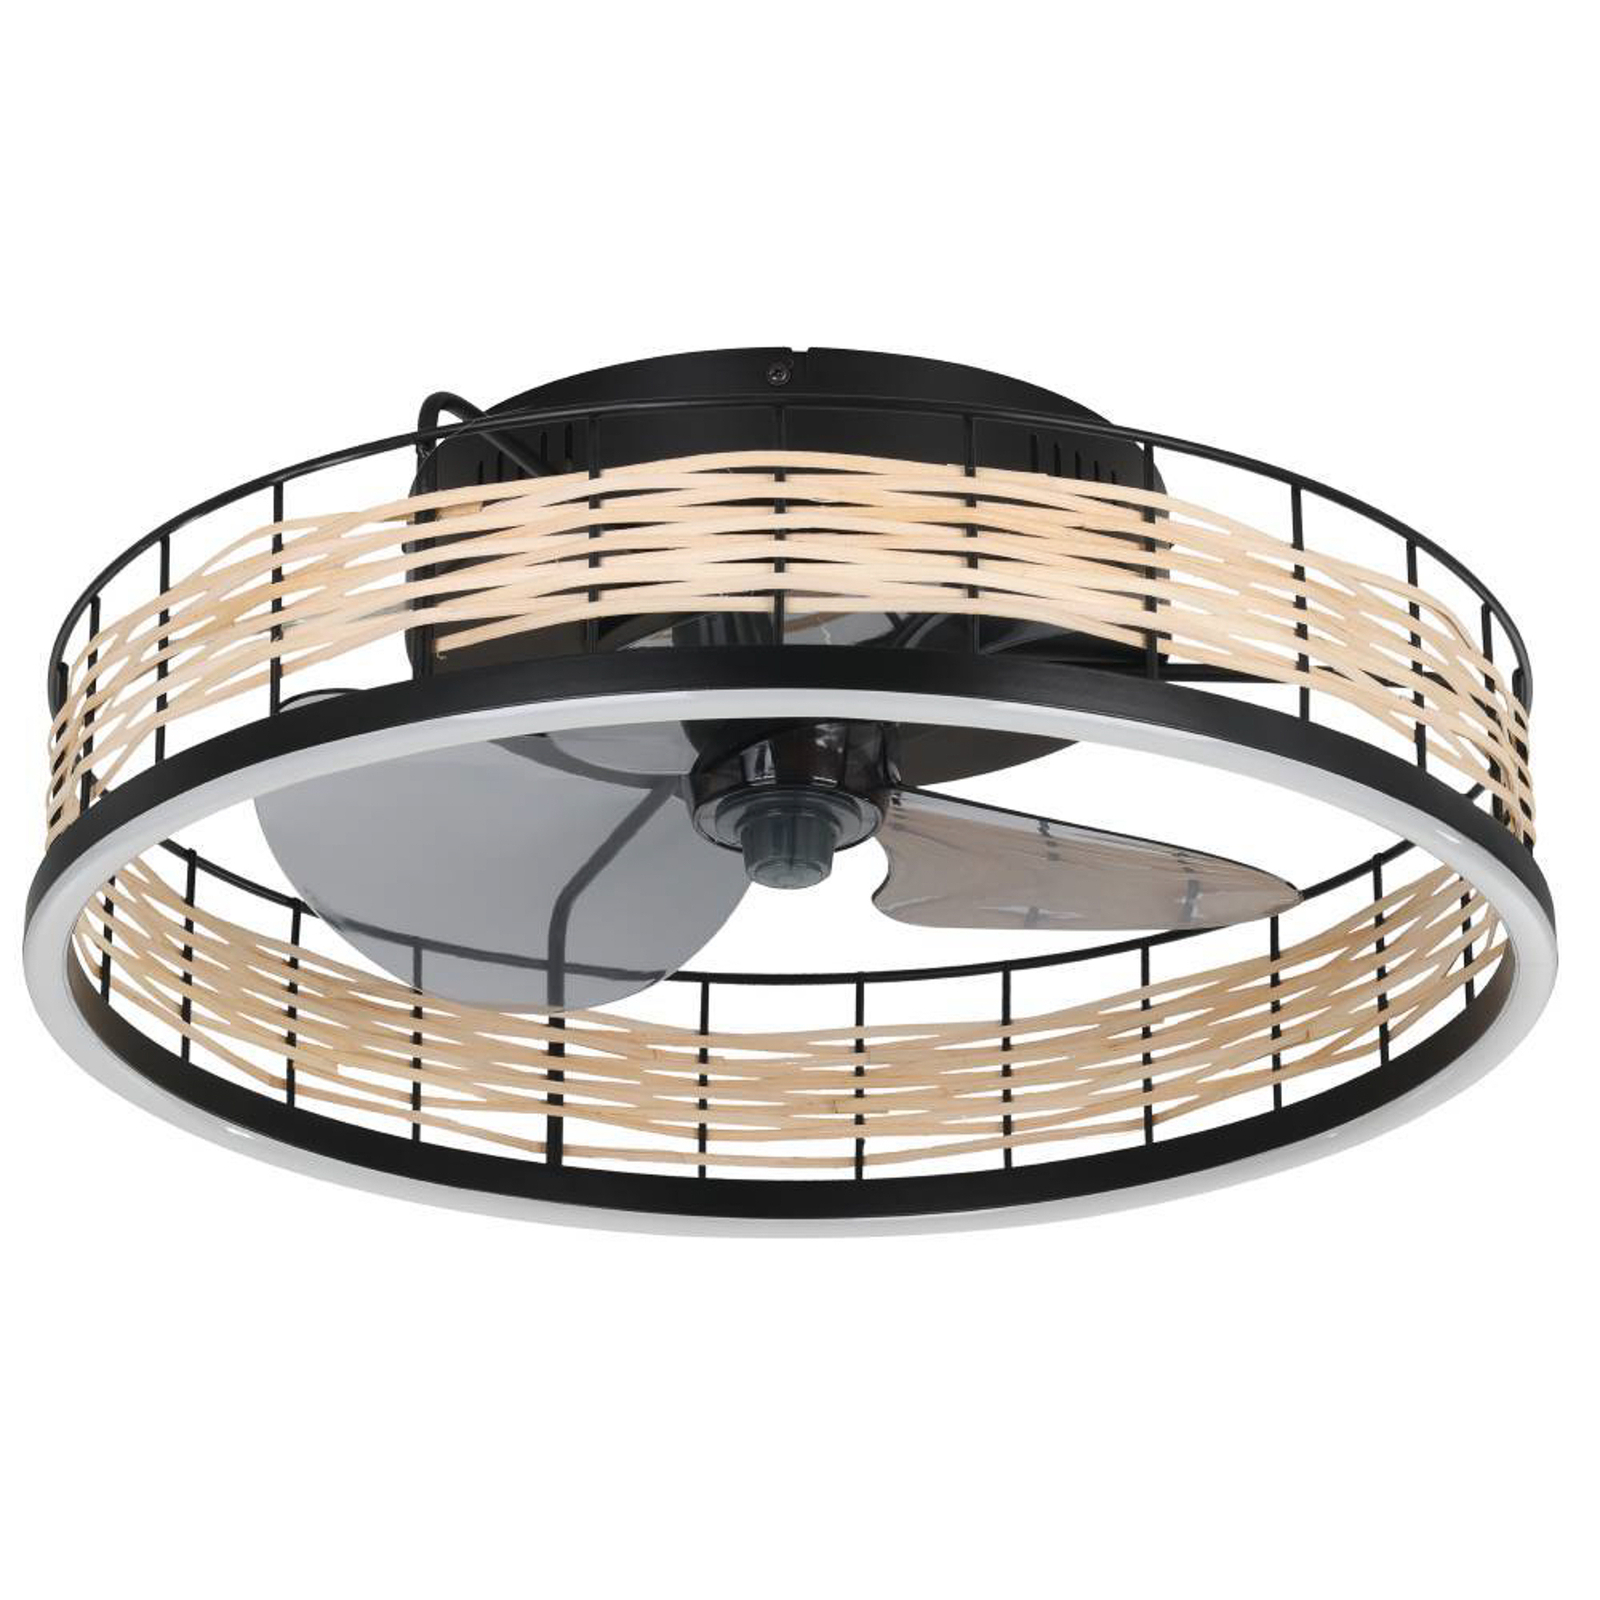 EGLO Frana LED ceiling light with fan